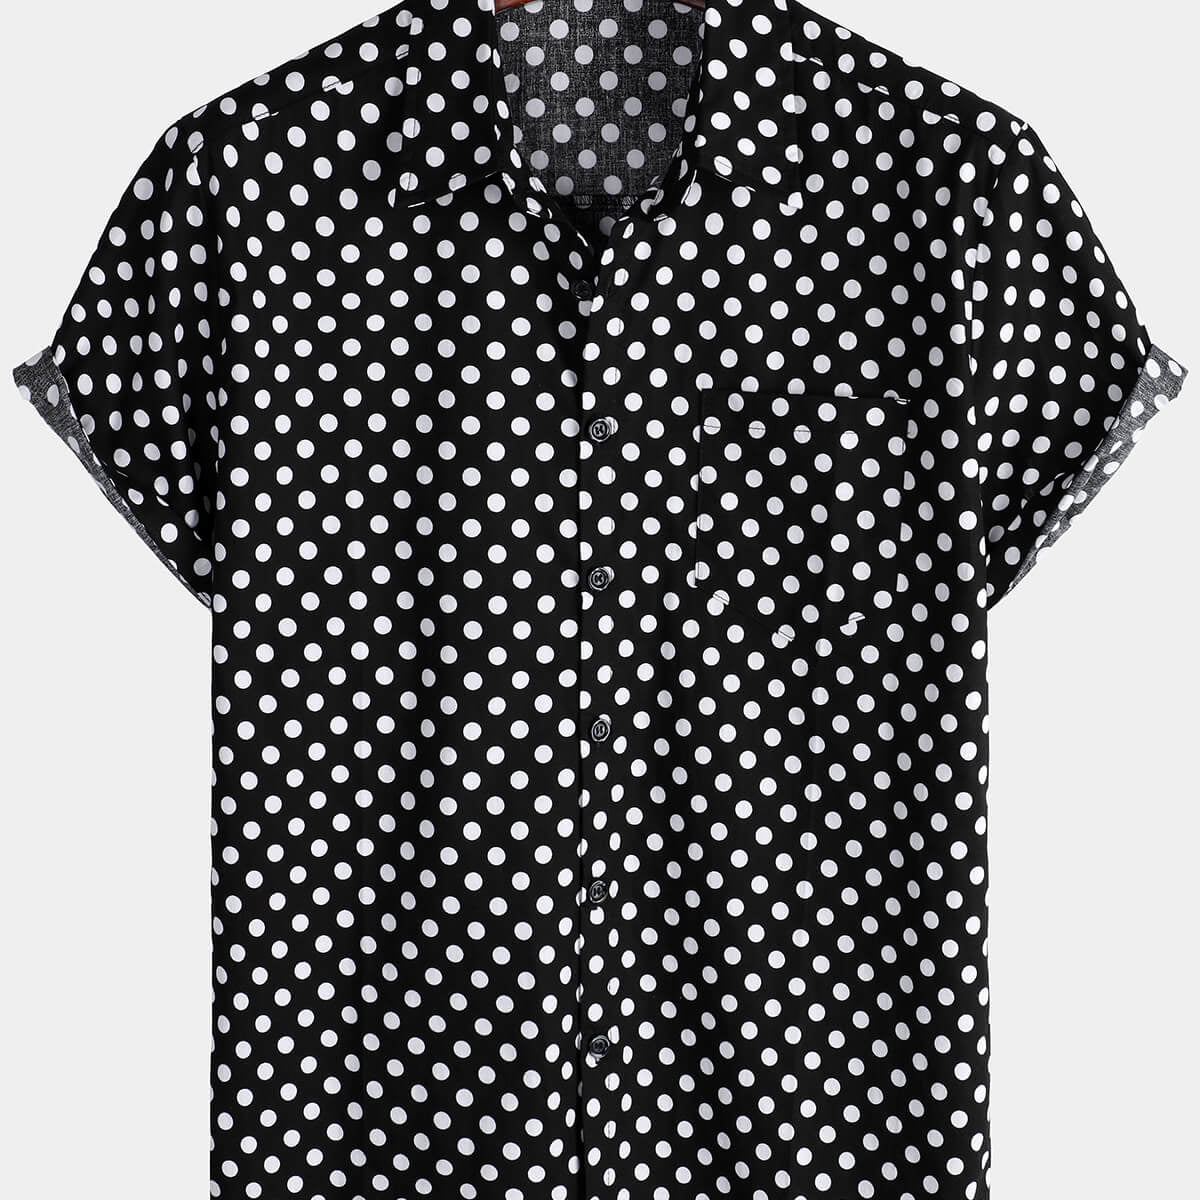 Men's Cotton Casual Polka Dot Summer Black Pocket Short Sleeve Shirt